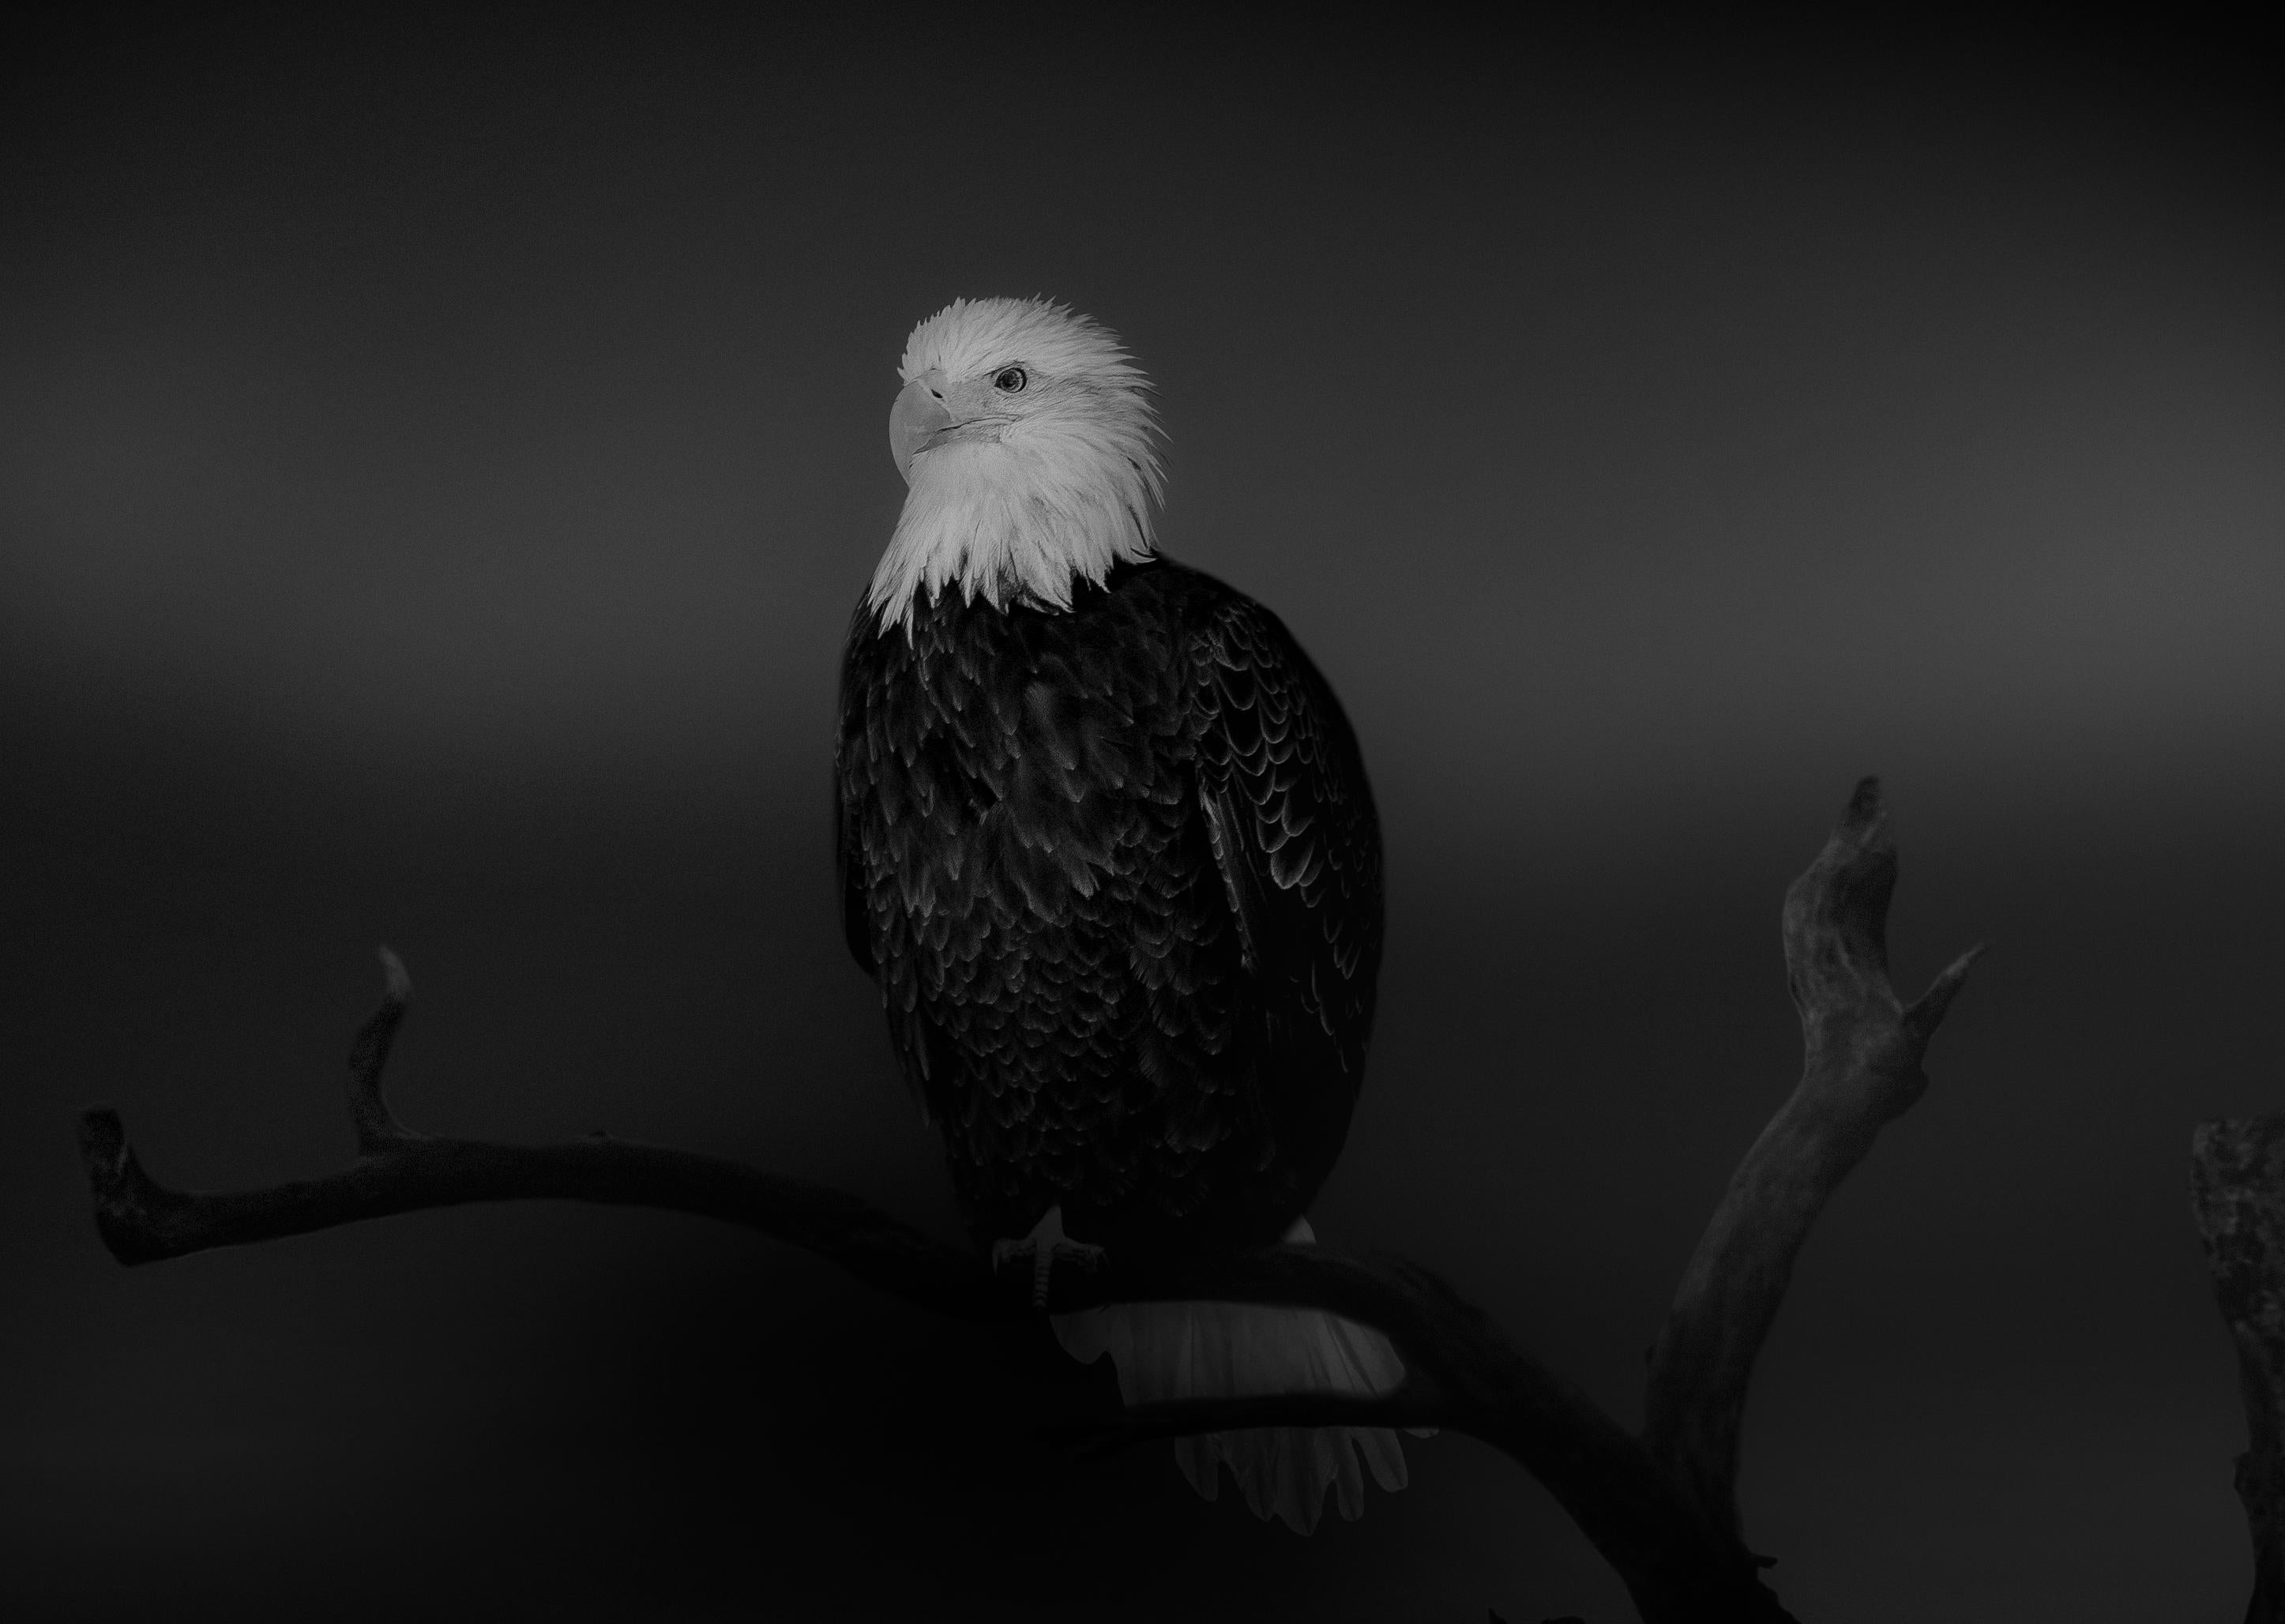 Shane Russeck Animal Print - "Bald Eagle" 36x48 - Black & White Photography, Photograph Art